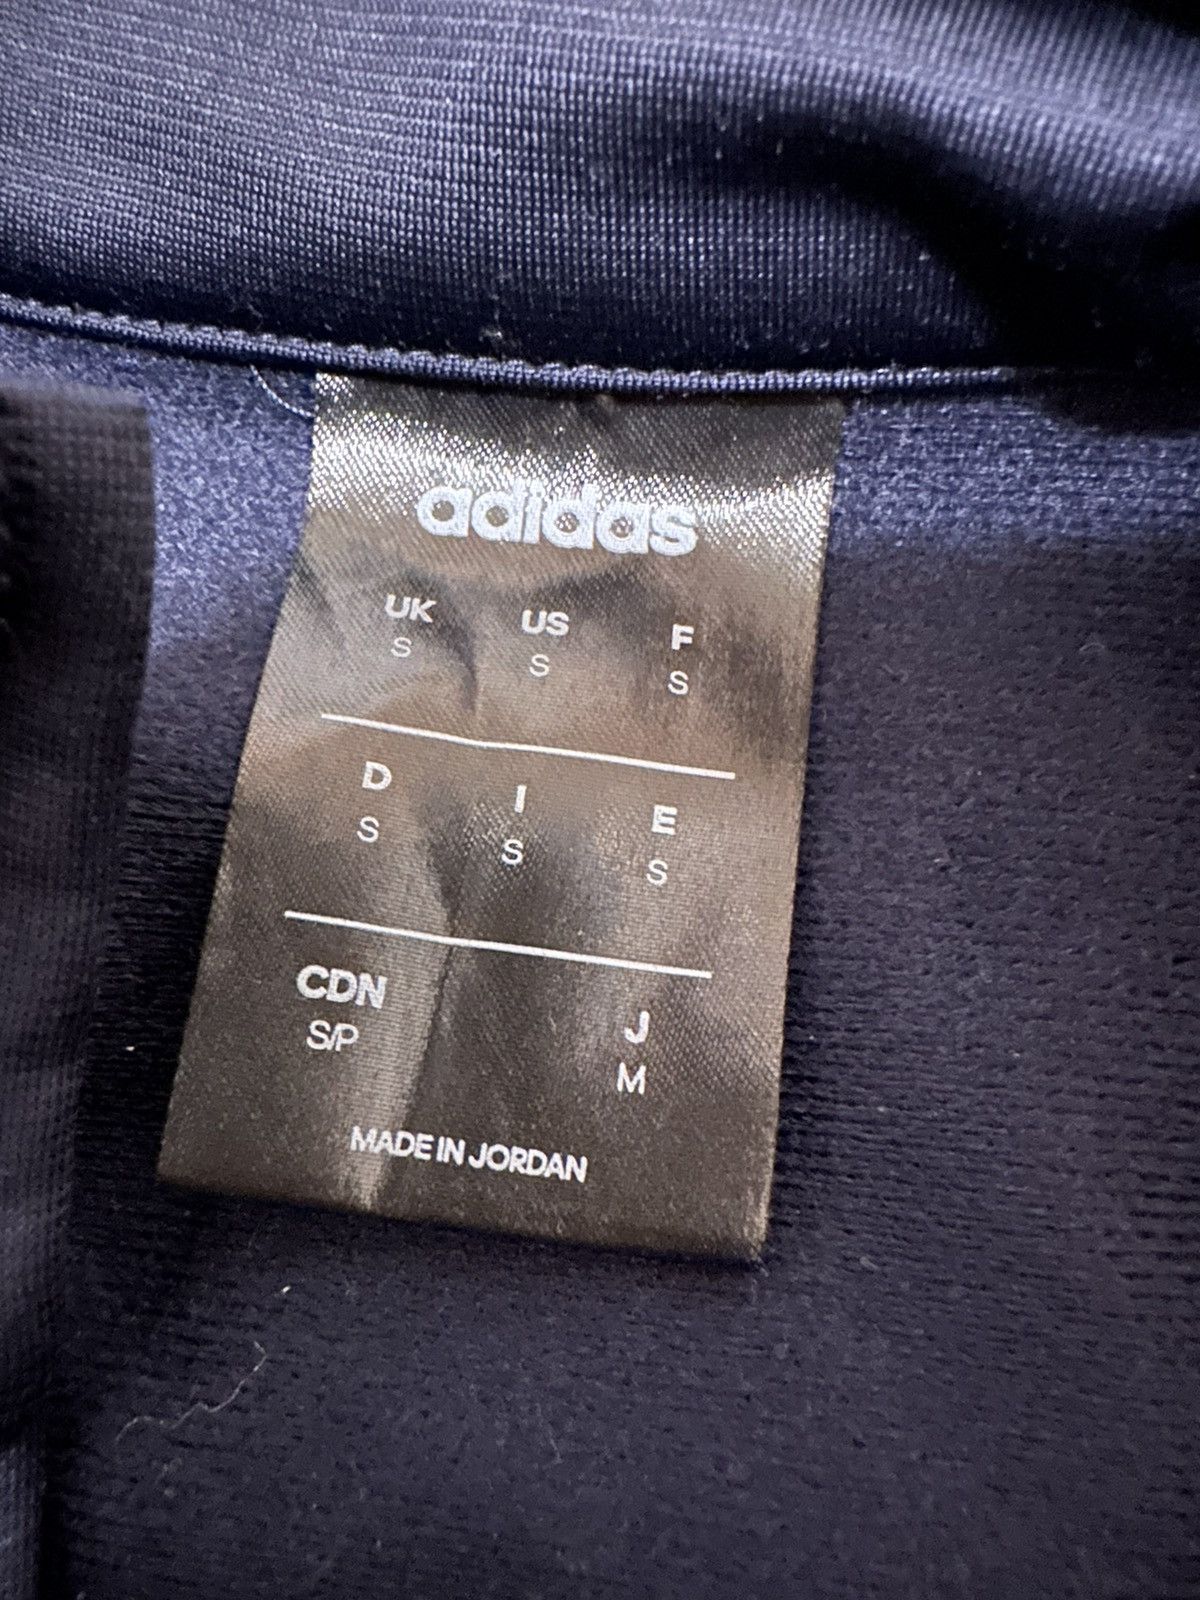 Adidas adidas navy track jacket Size US S / EU 44-46 / 1 - 3 Thumbnail